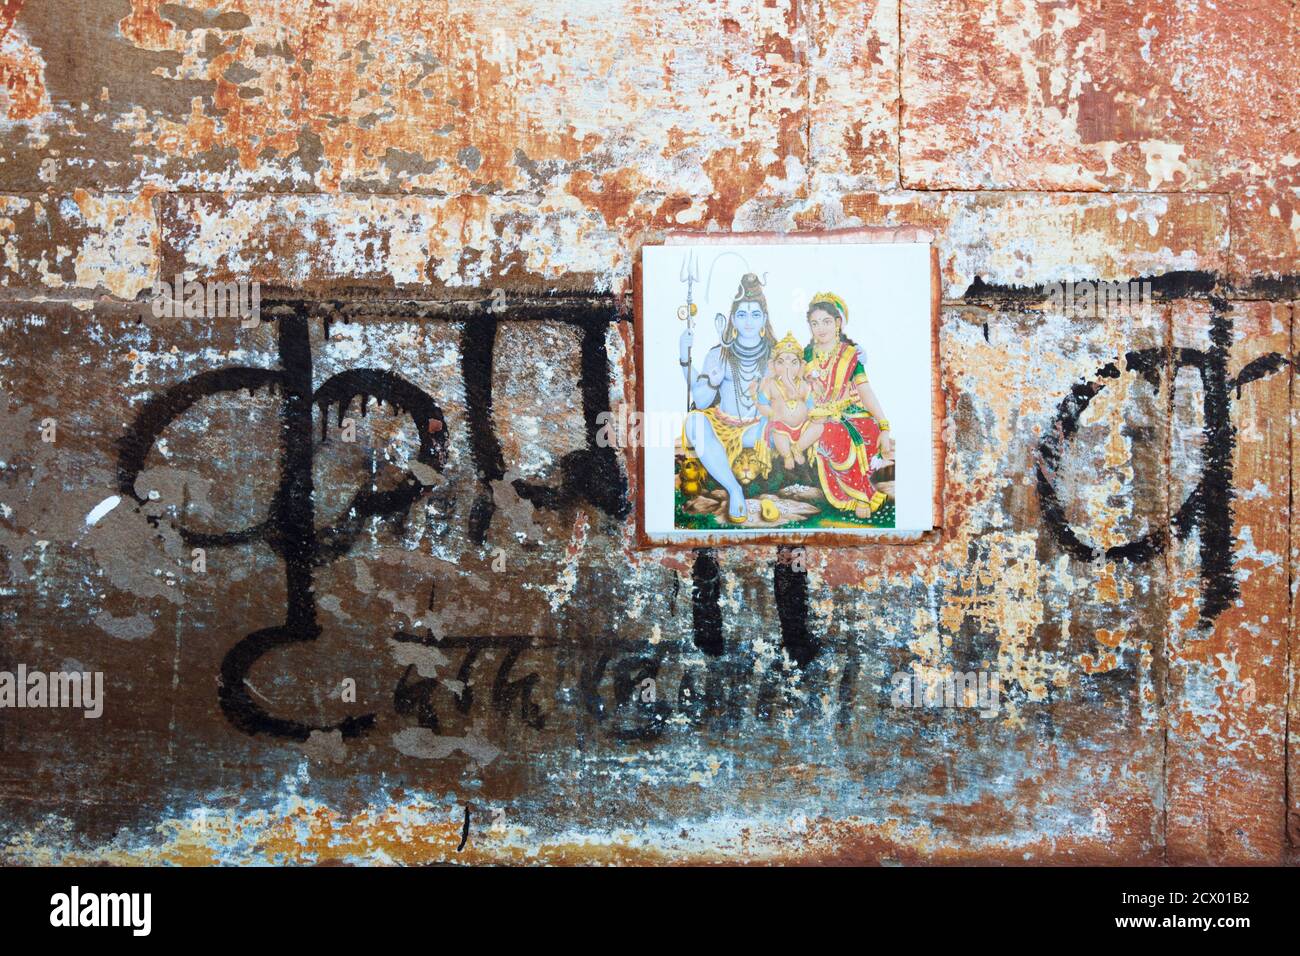 Varanasi, Uttar Pradesh, India : Close up of a weathered wall with Devanagari script and a tile depicting the gods Shiva, Parvati and Ganesh. Stock Photo